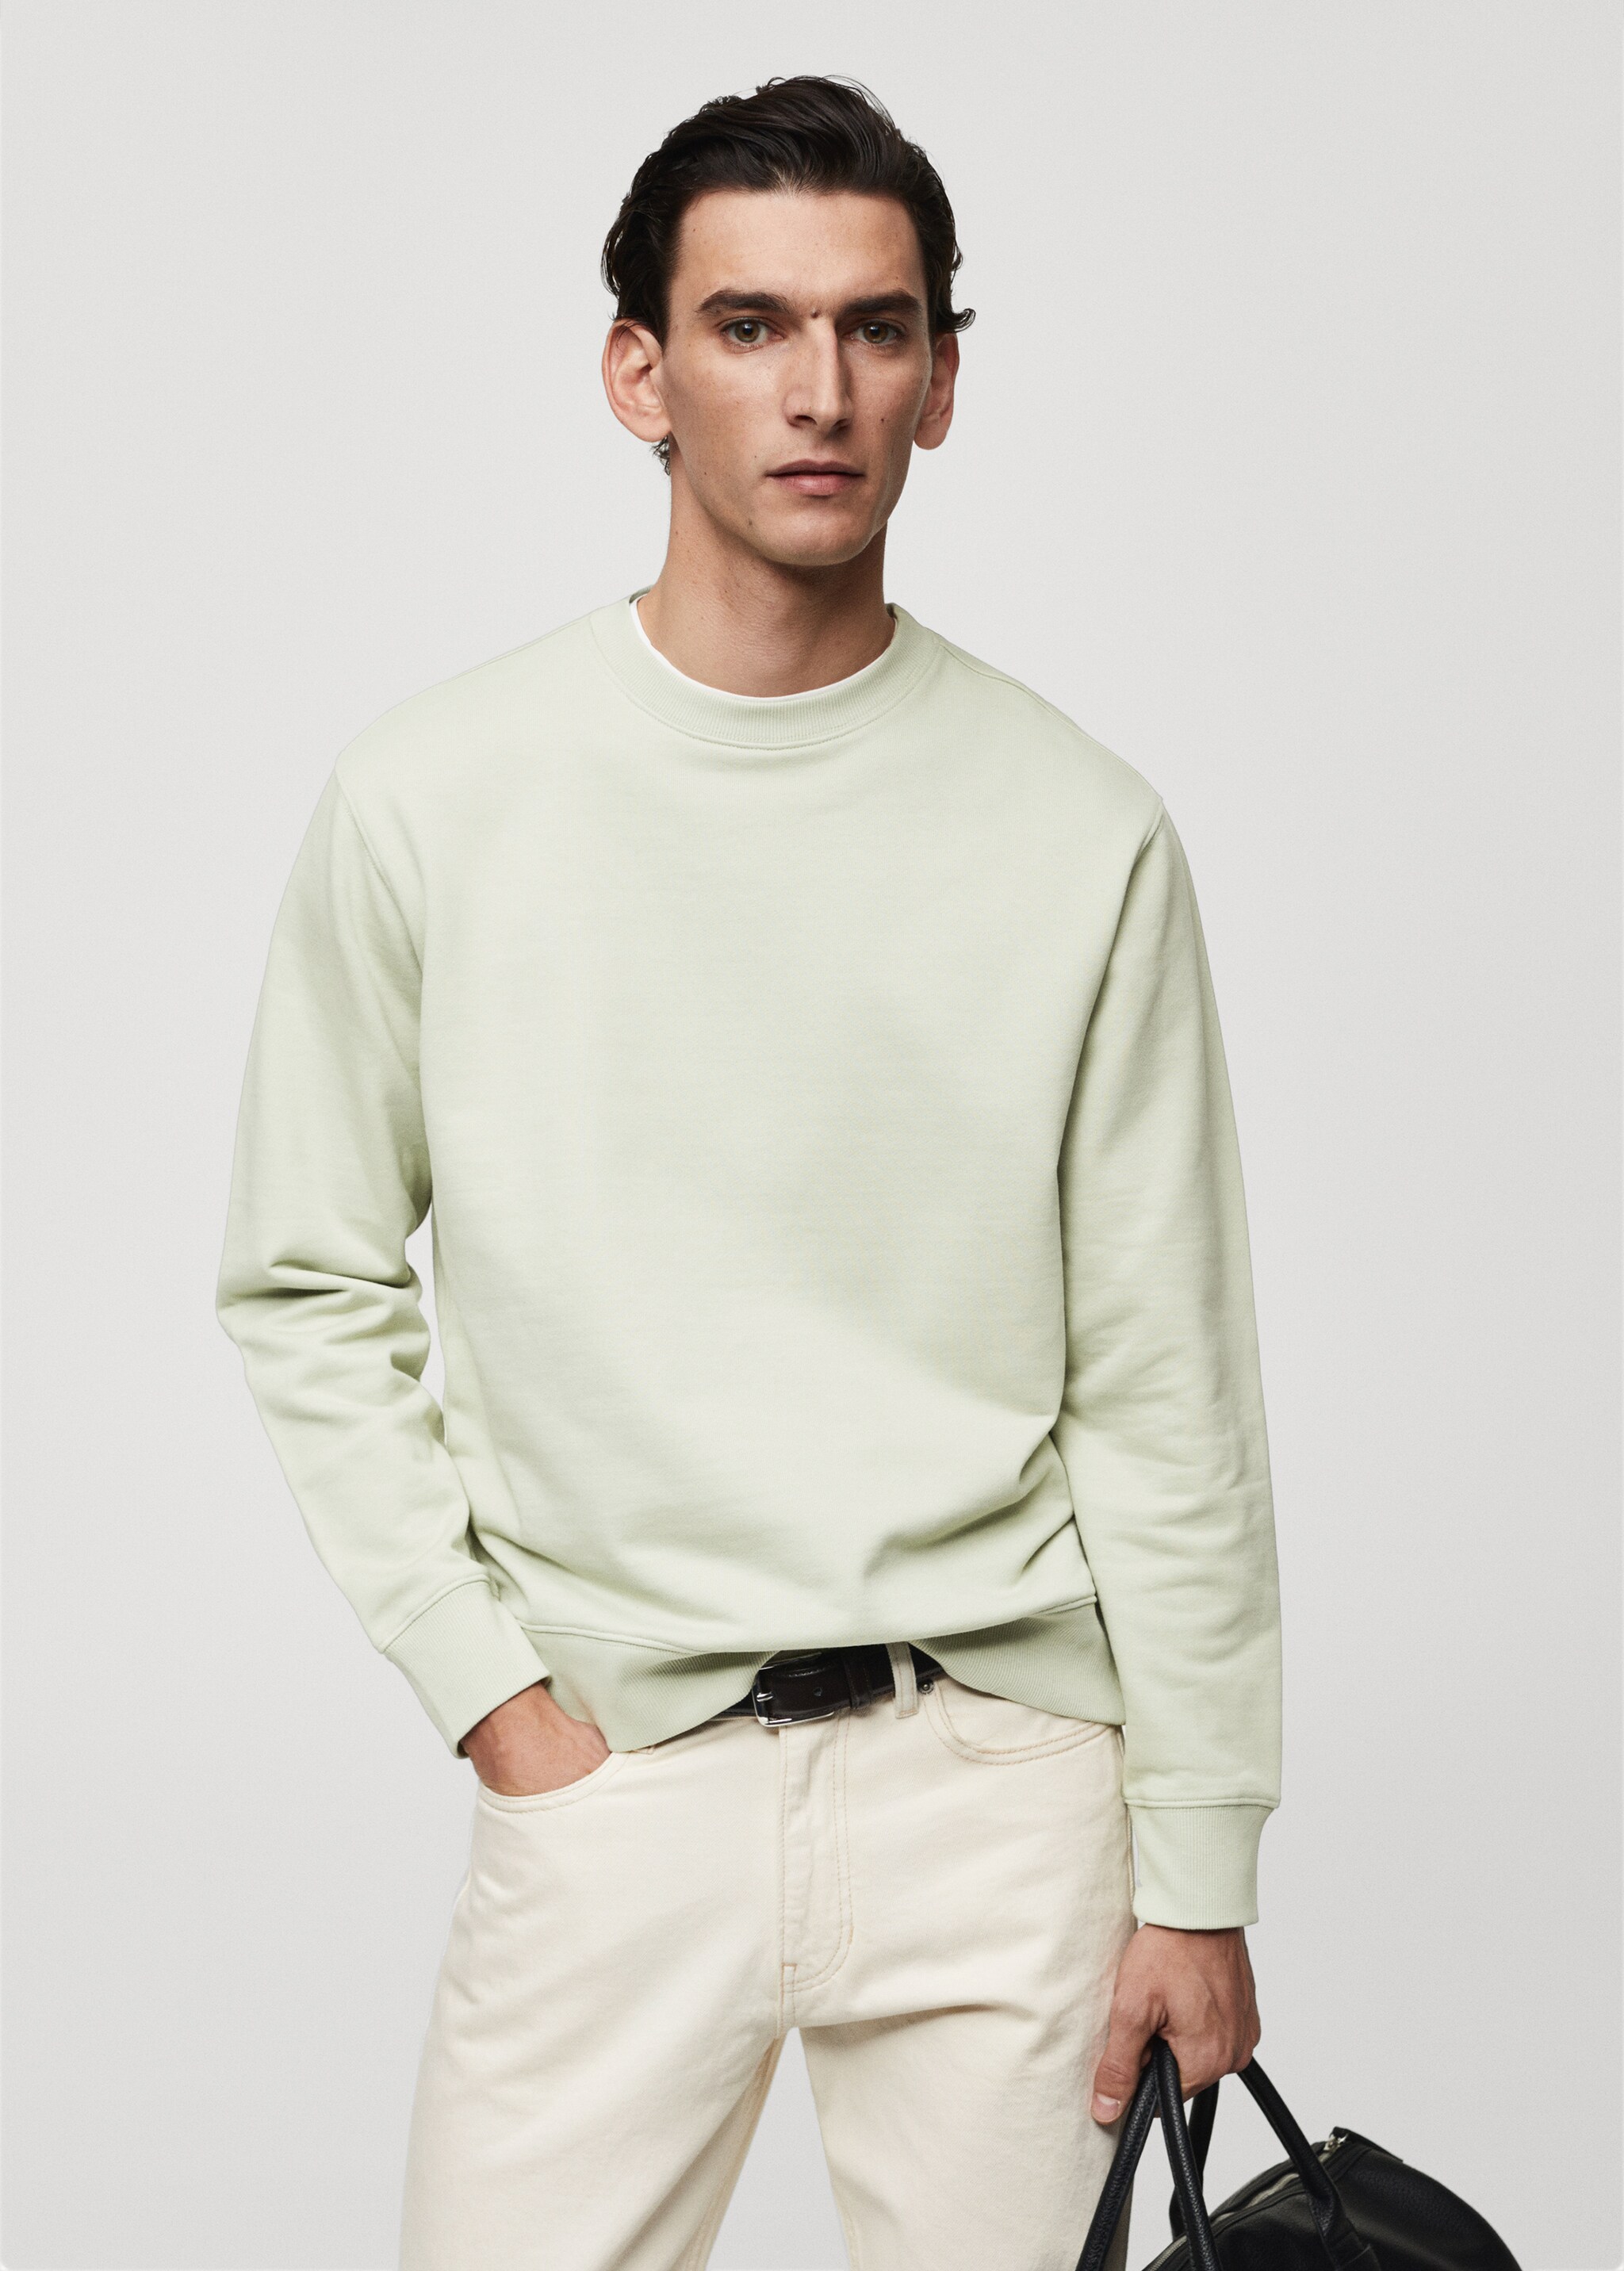 100% cotton basic sweatshirt  - Medium plane